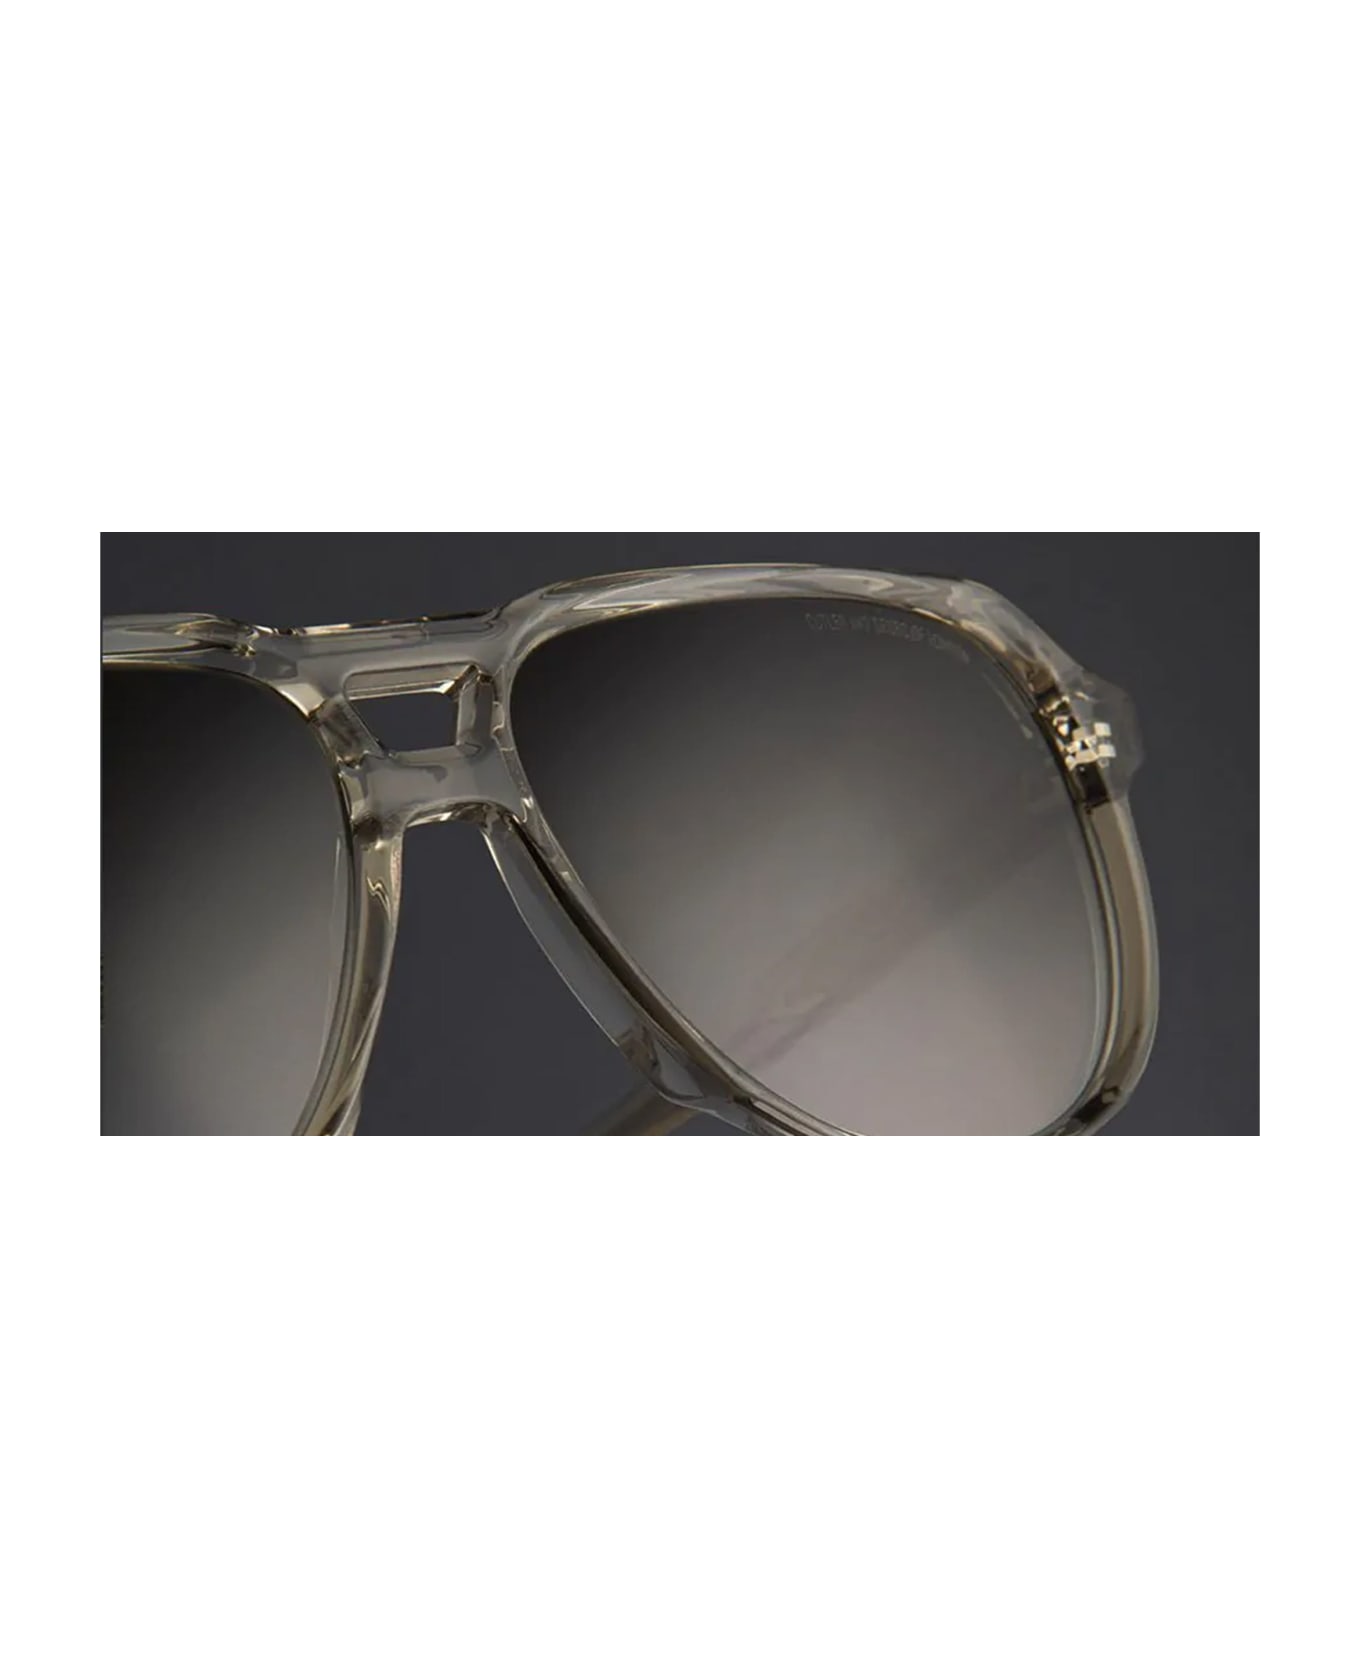 Cutler and Gross 9782-03 - Sand Crystal Sunglasses - transparent beige